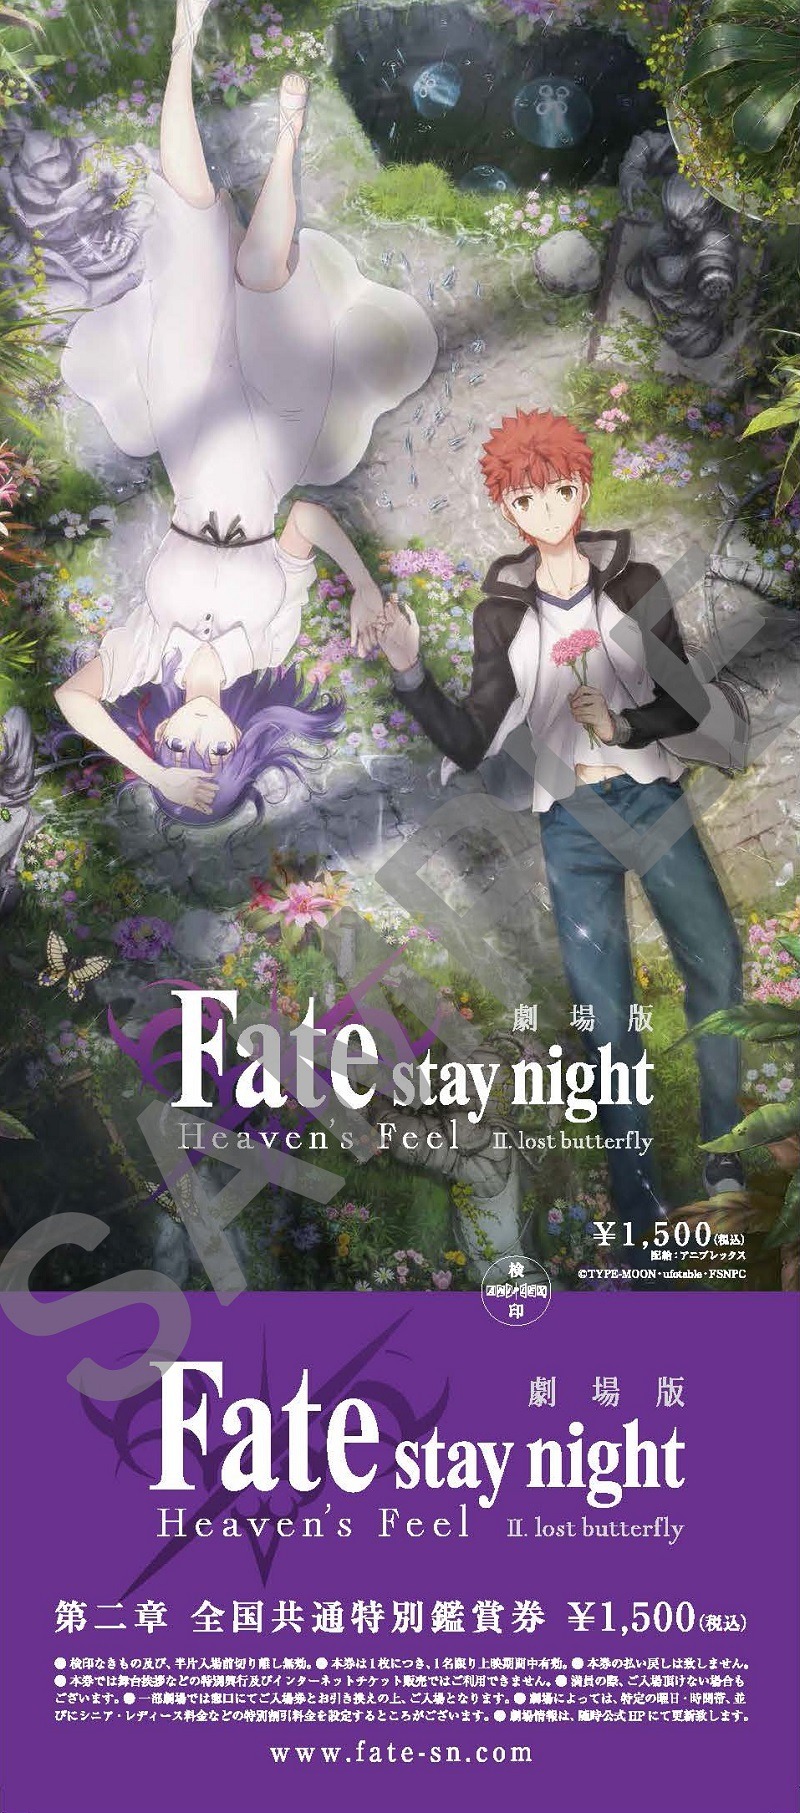 「『劇場版「Fate/stay night [Heaven's Feel]」II.lost butterfly』第1弾前売券」(C)TYPE-MOON・ufotable・FSNPC